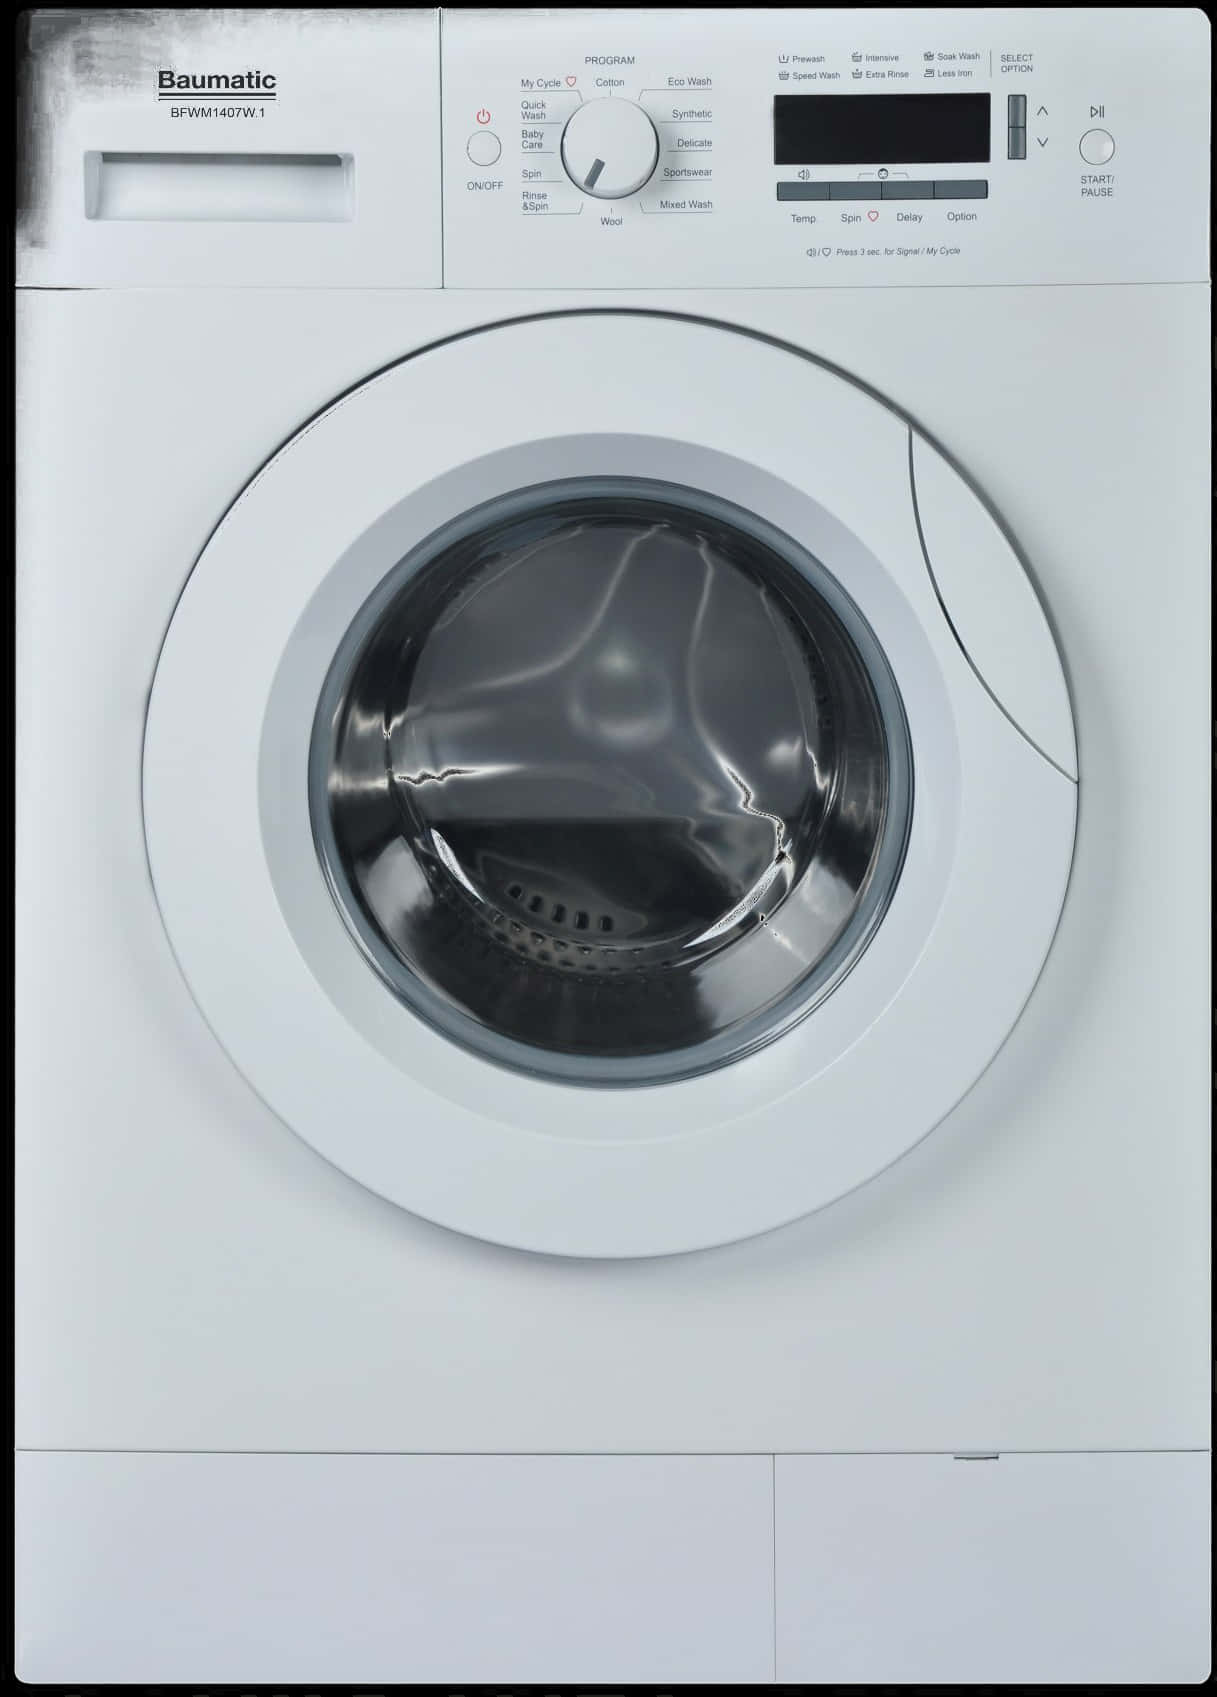 A White Washing Machine With A Round Window